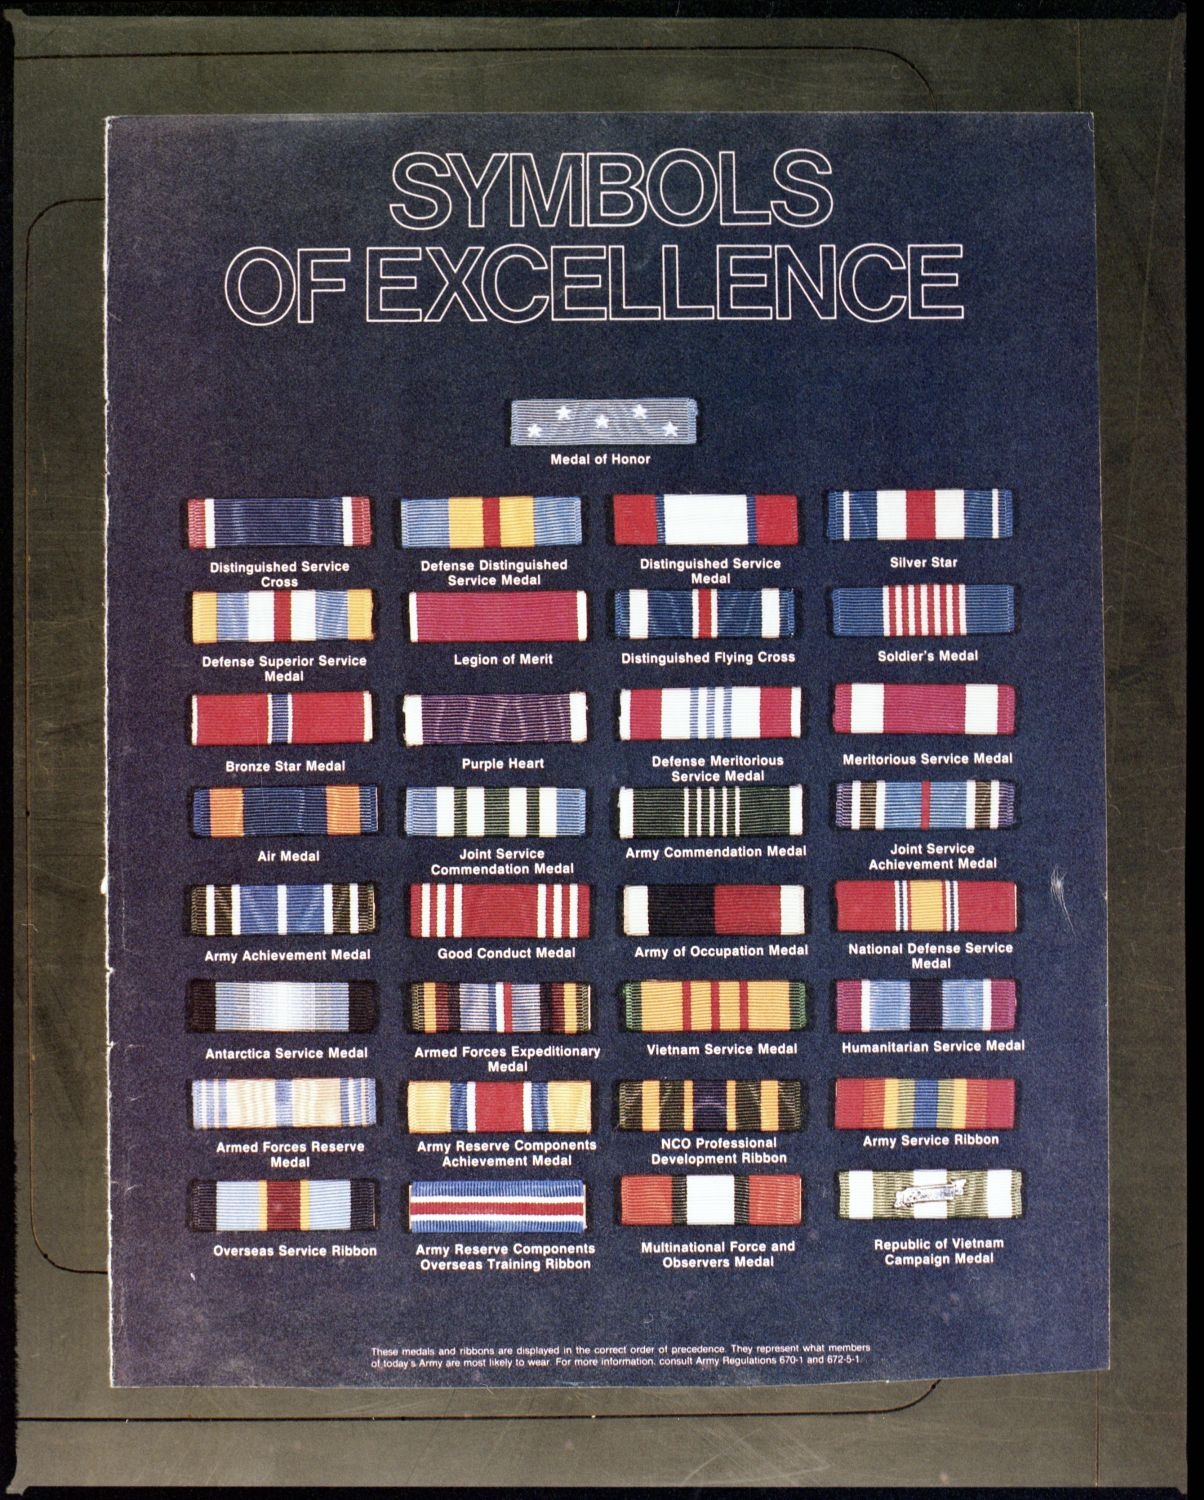 Fotografie: Symbols of Excellence, Bandschnallen der U.S. Army (AlliiertenMuseum/U.S. Army Photograph Public Domain Mark)